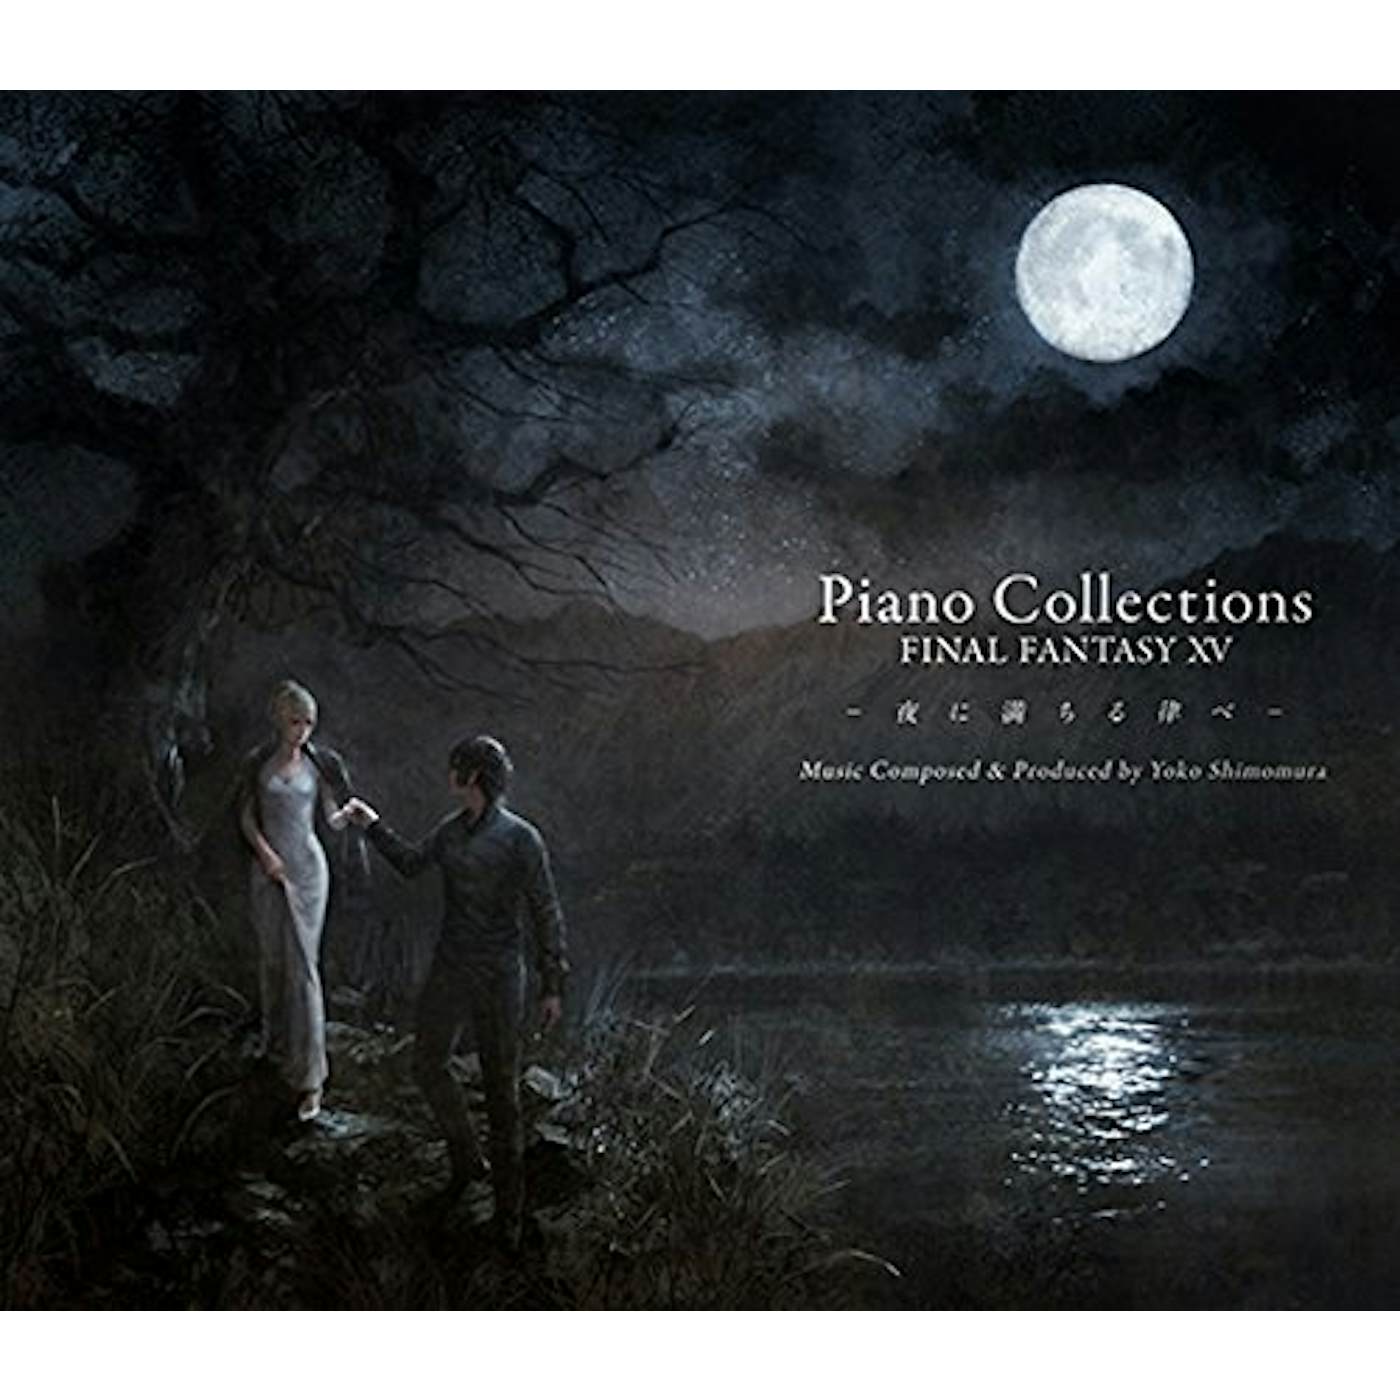 Final Fantasy 15 PIANO COLLECTIONS CD